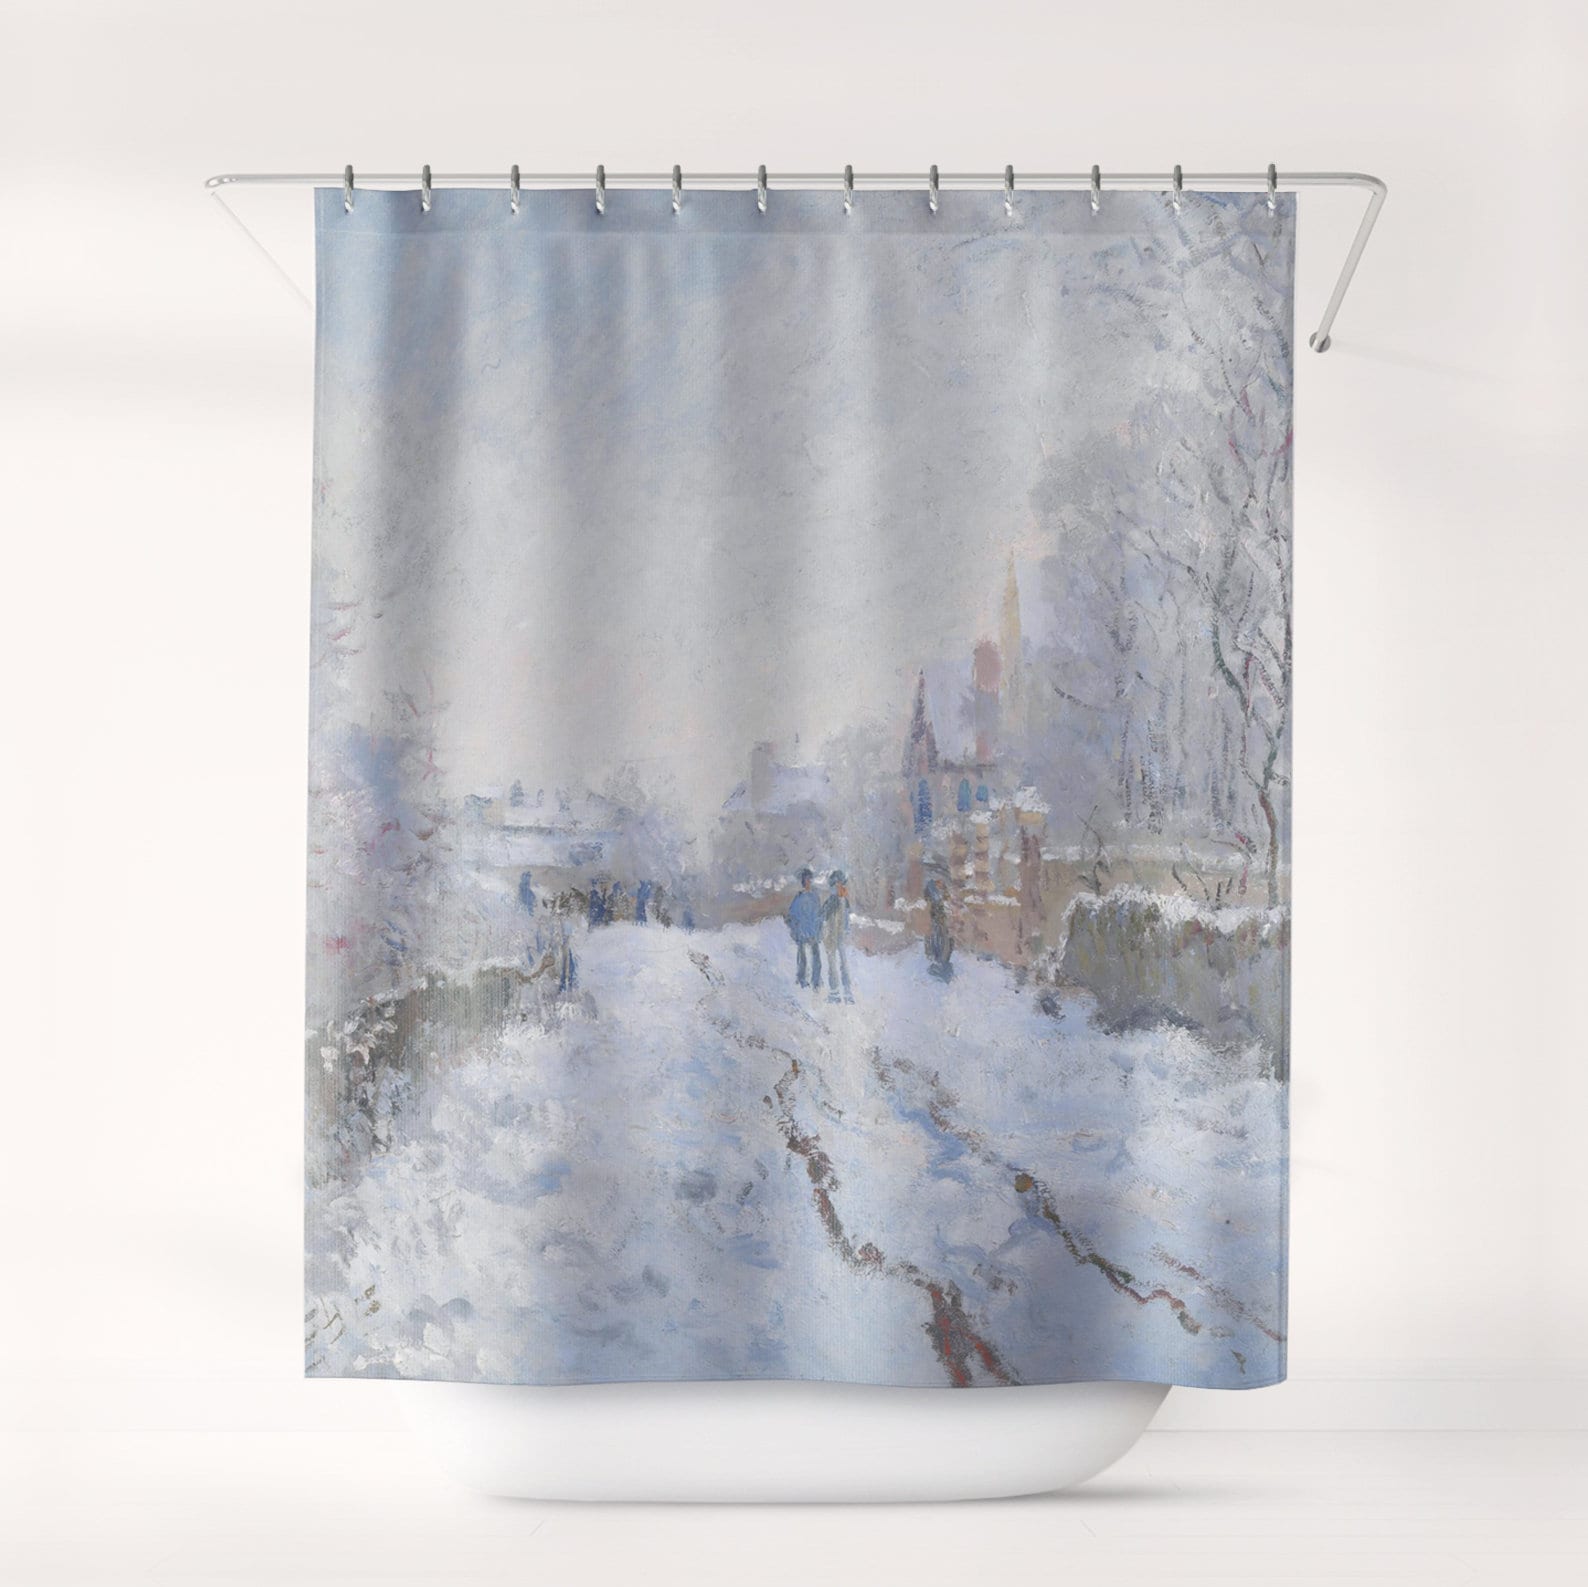 WC-CMO-13 Claude Monet Snow Scene at Argenteuil iPhone X Wallet ...